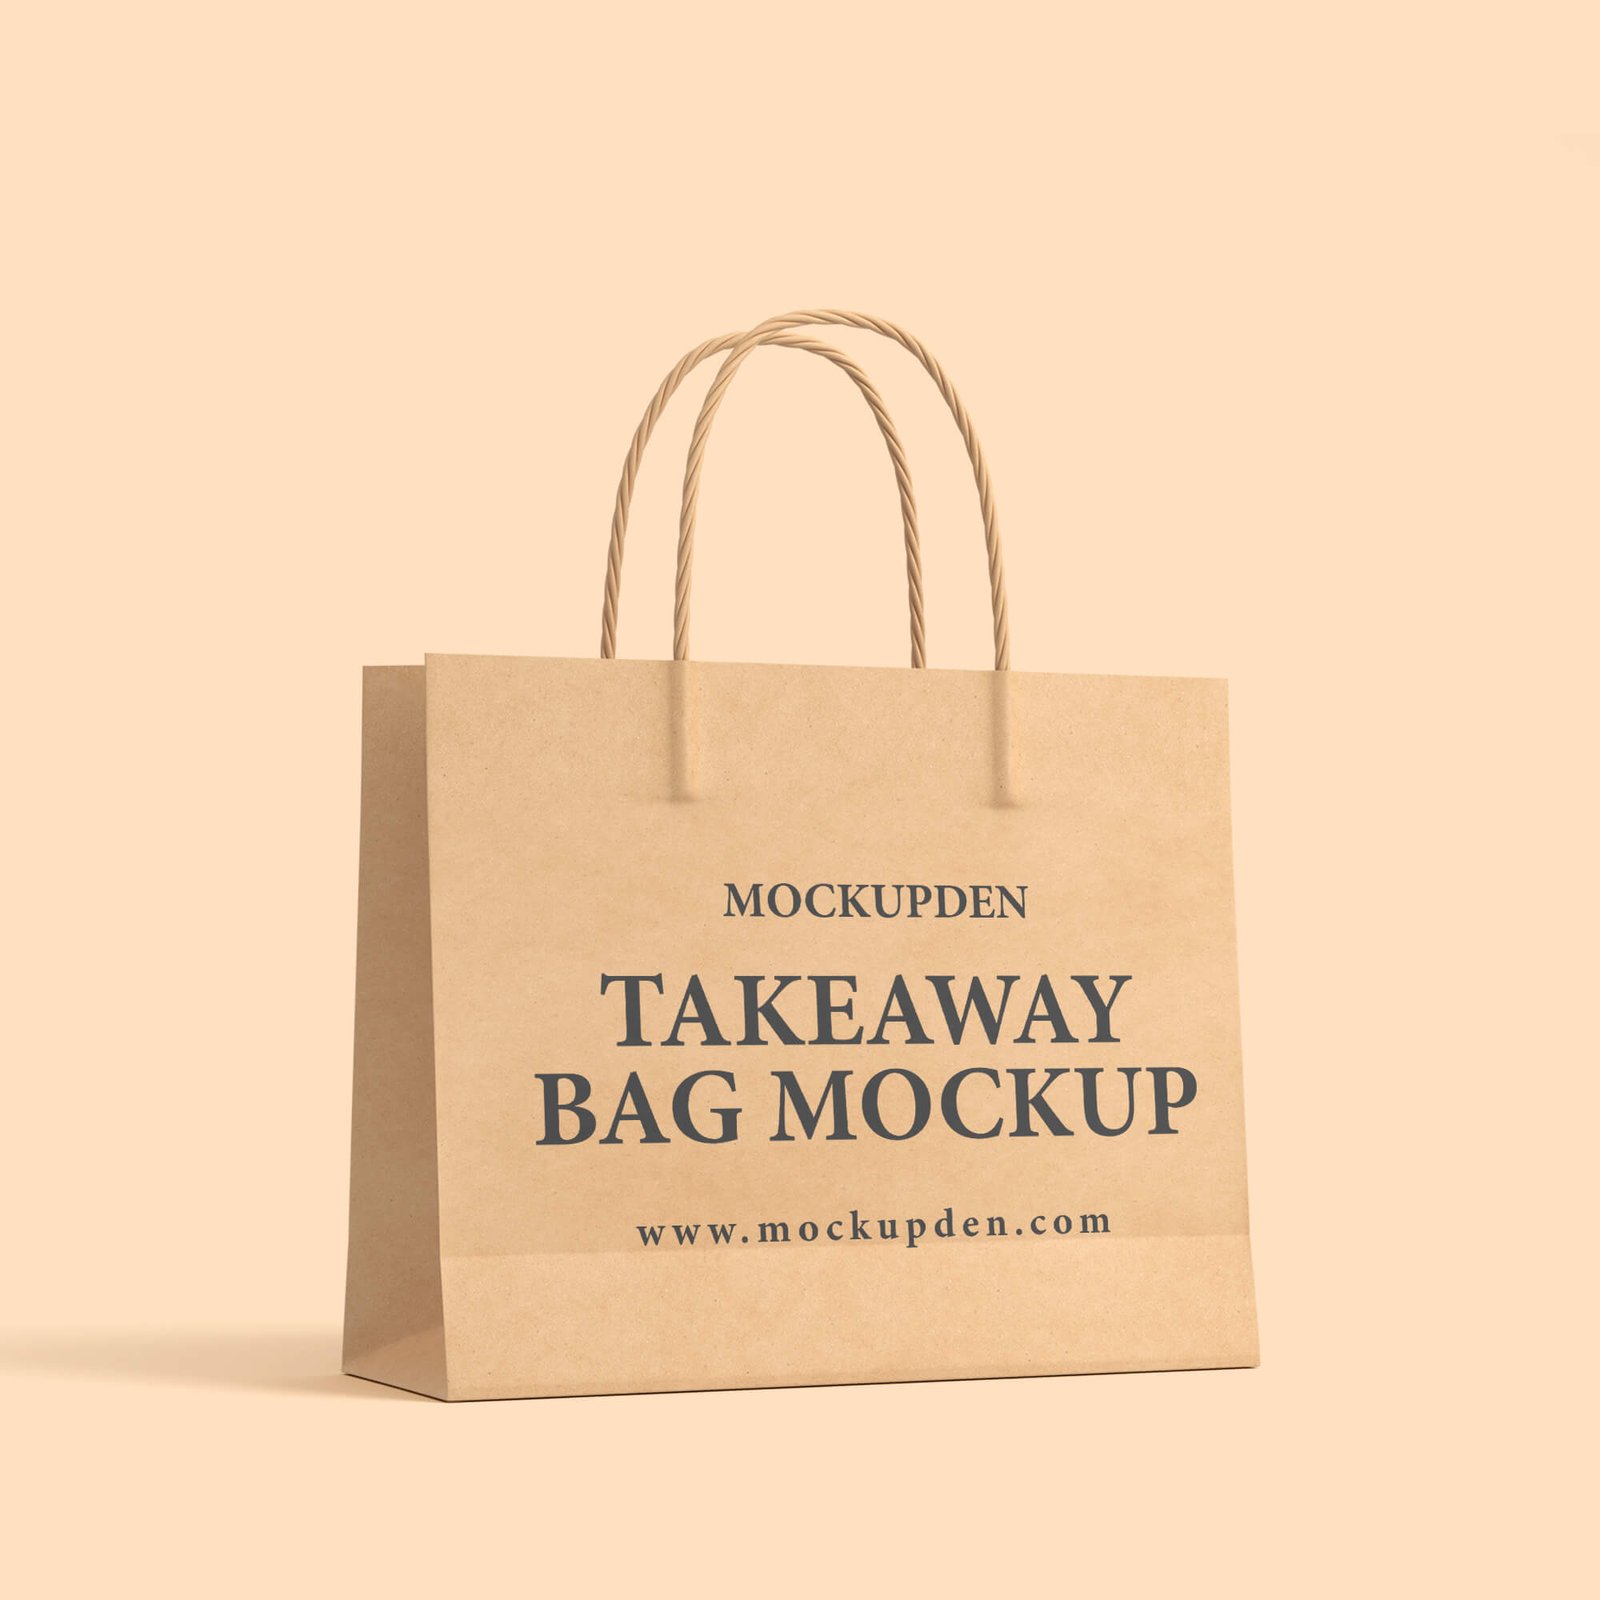 Design Free Takeaway Bag Mockup PSD Template